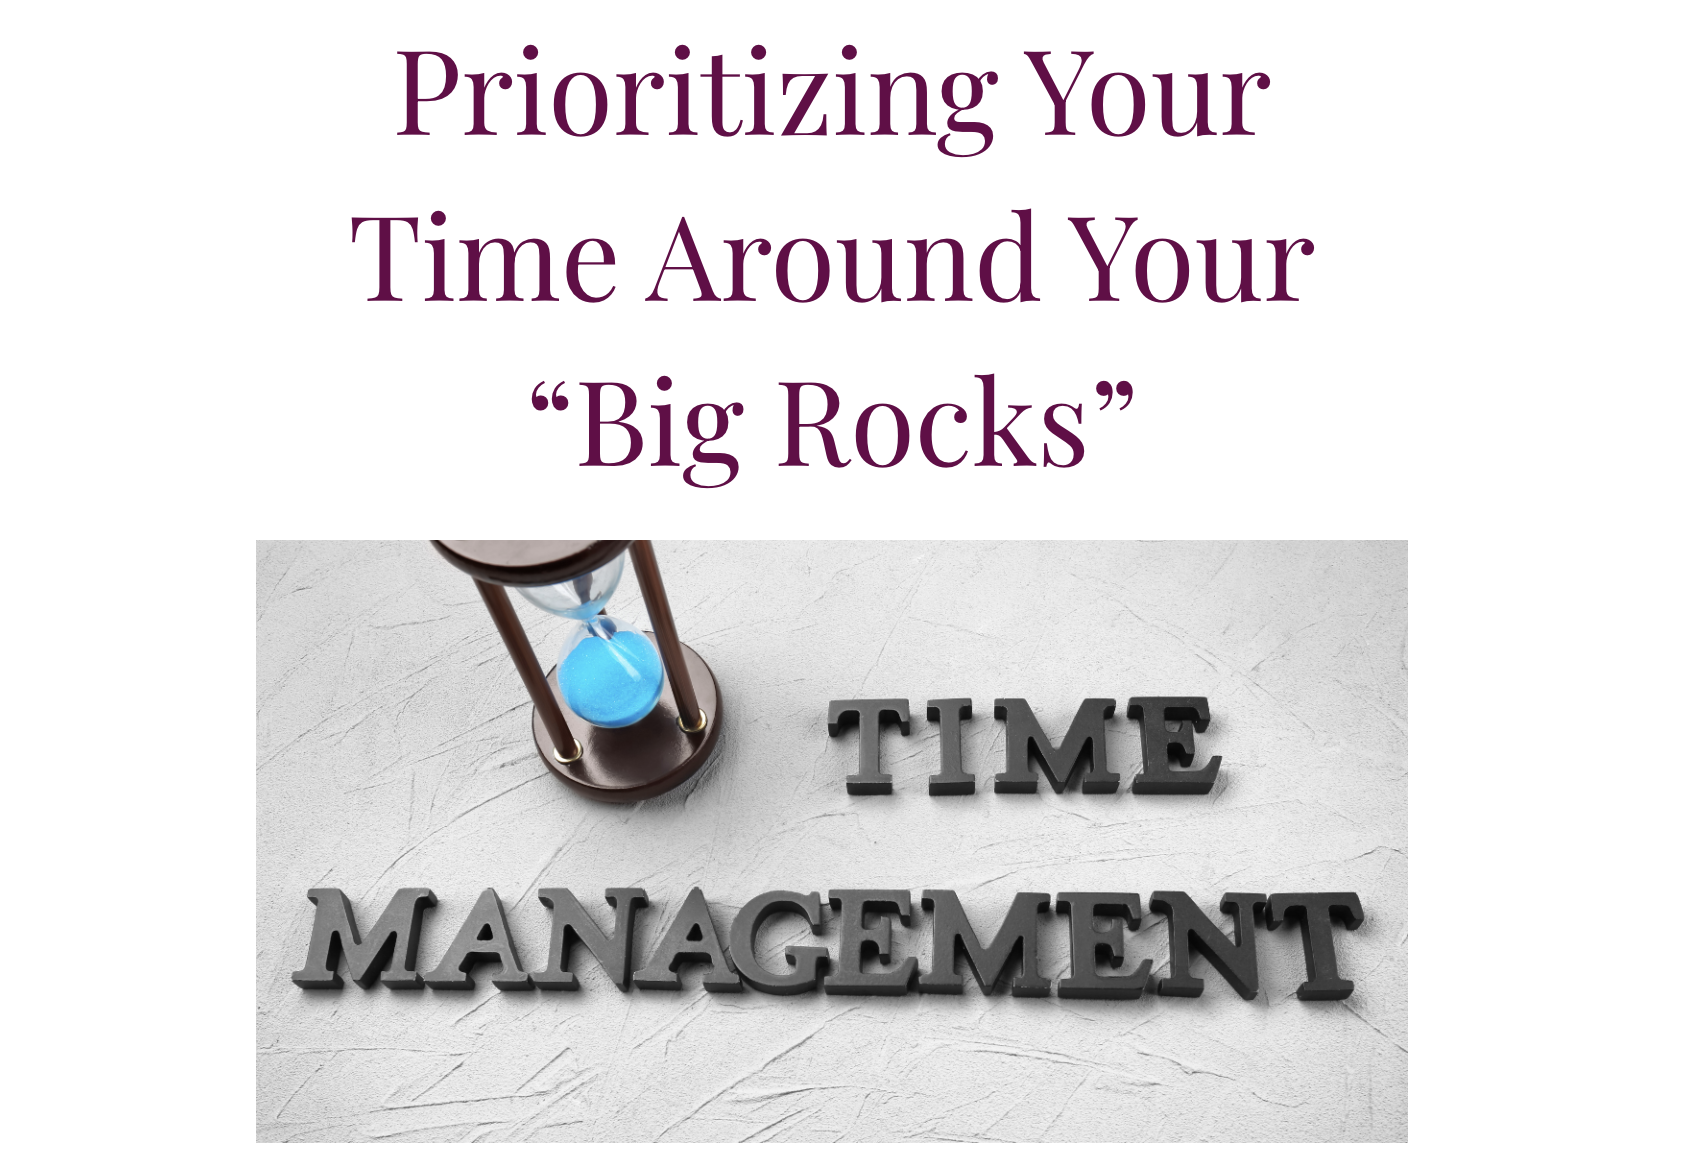 Prioritizing Your Time Around Your “Big Rocks”